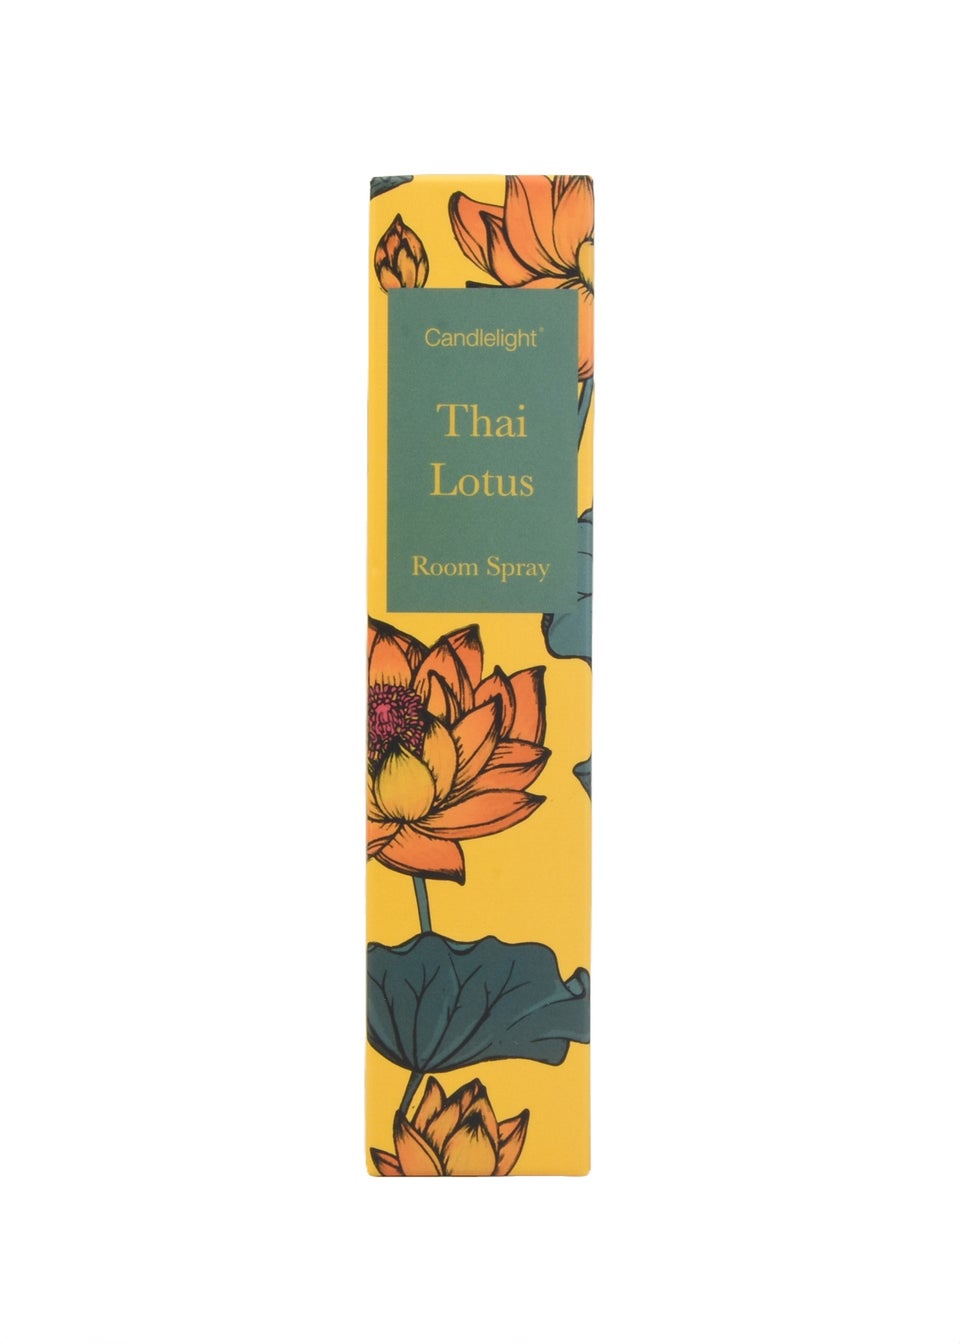 Candlelight Thai Lotus Room Spray